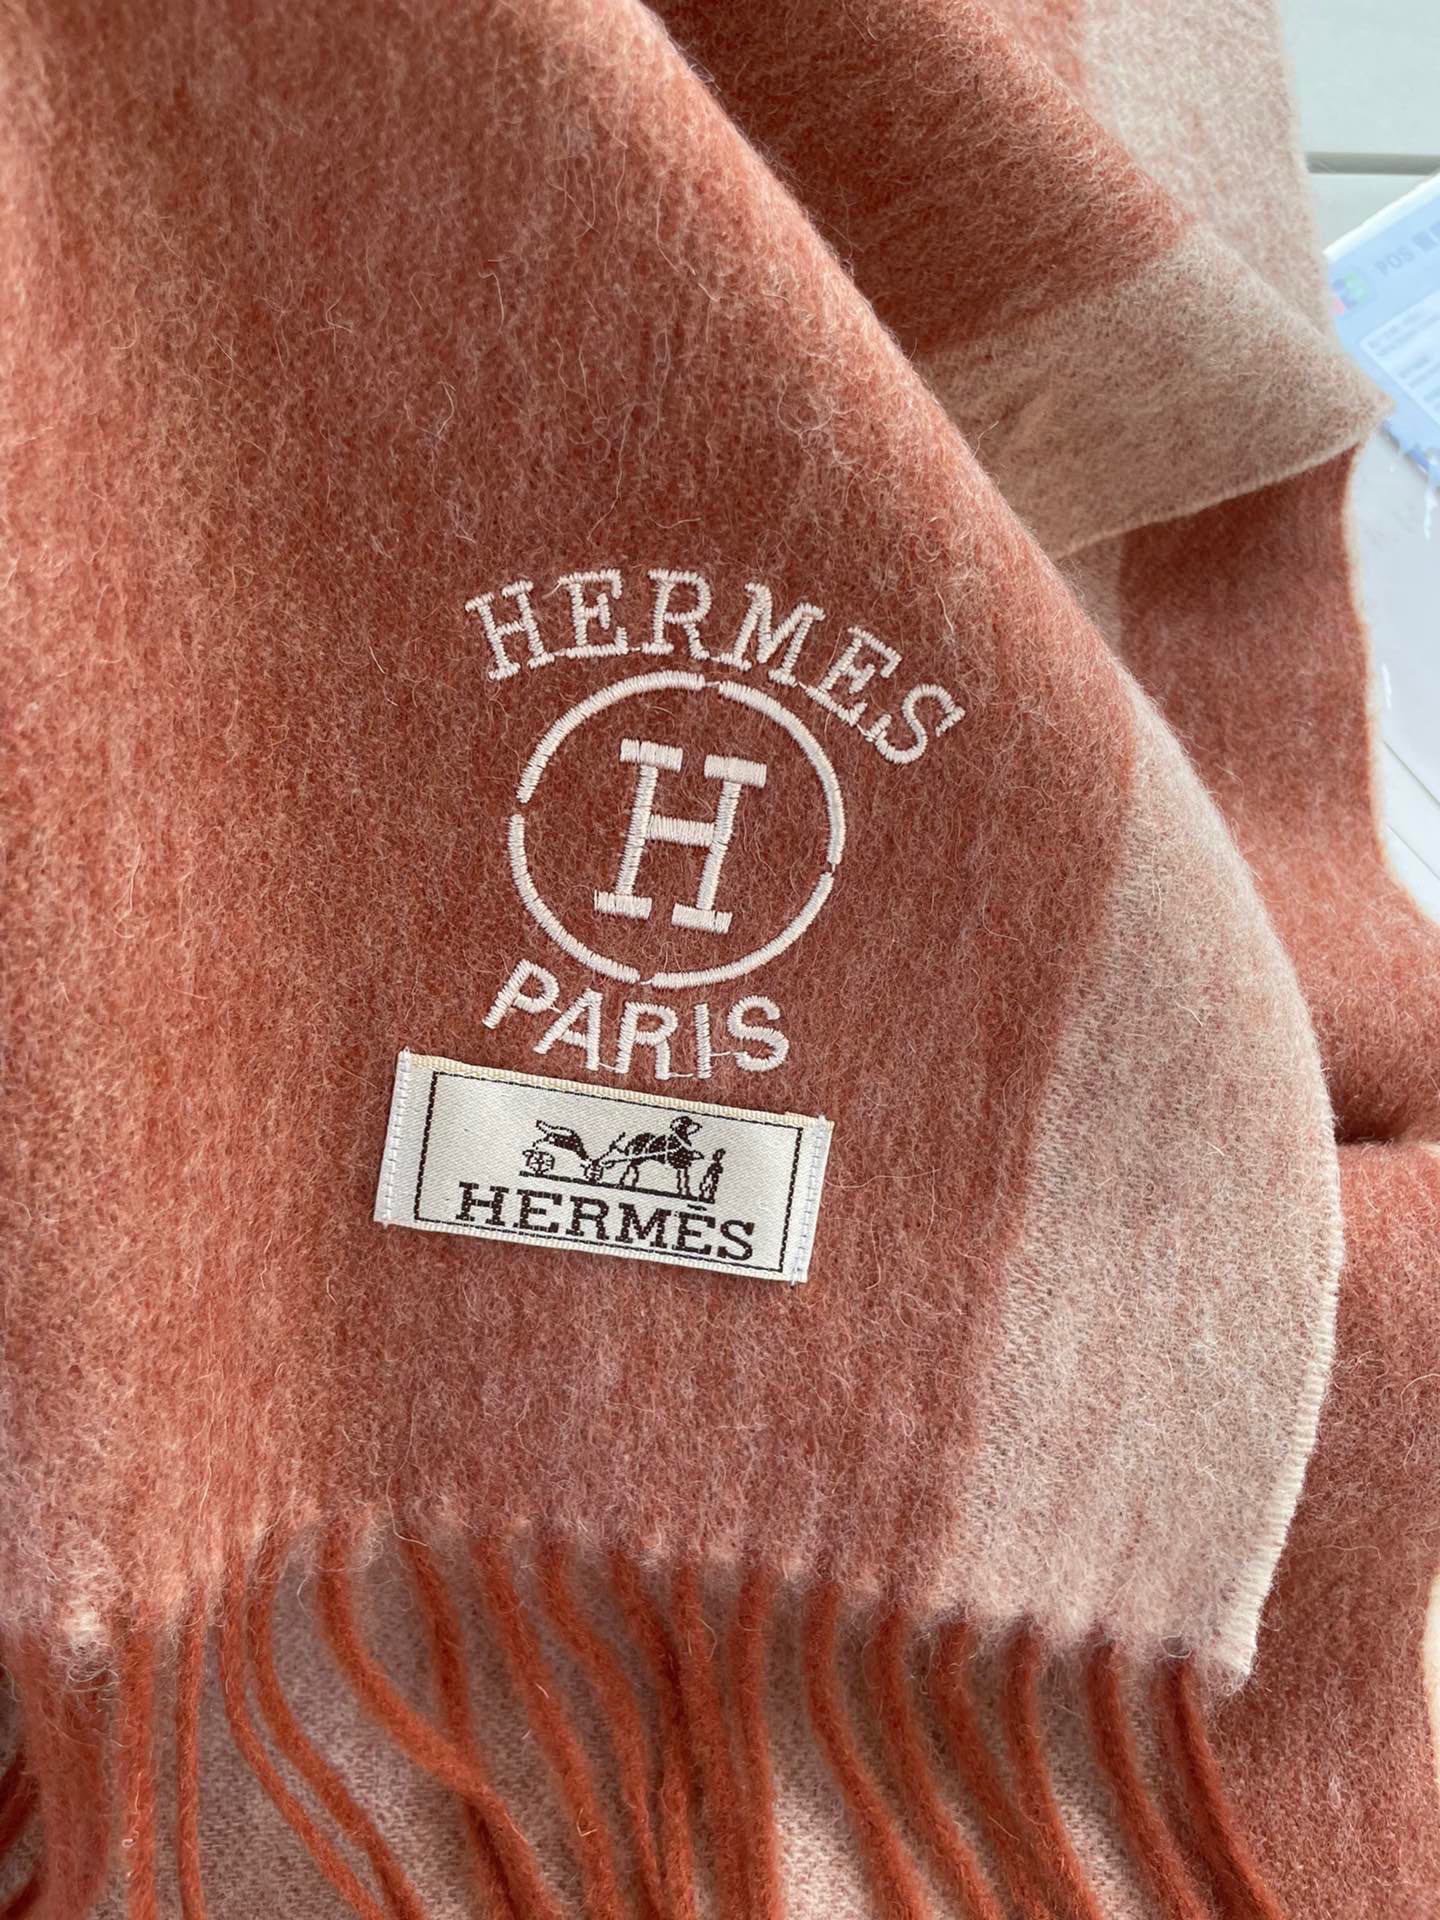 Hermes爱马仕女士拼色羊绒围巾重磅推荐100%顶级山羊绒材质非常保暖柔软亲肤不扎脖经典双面设计一条围